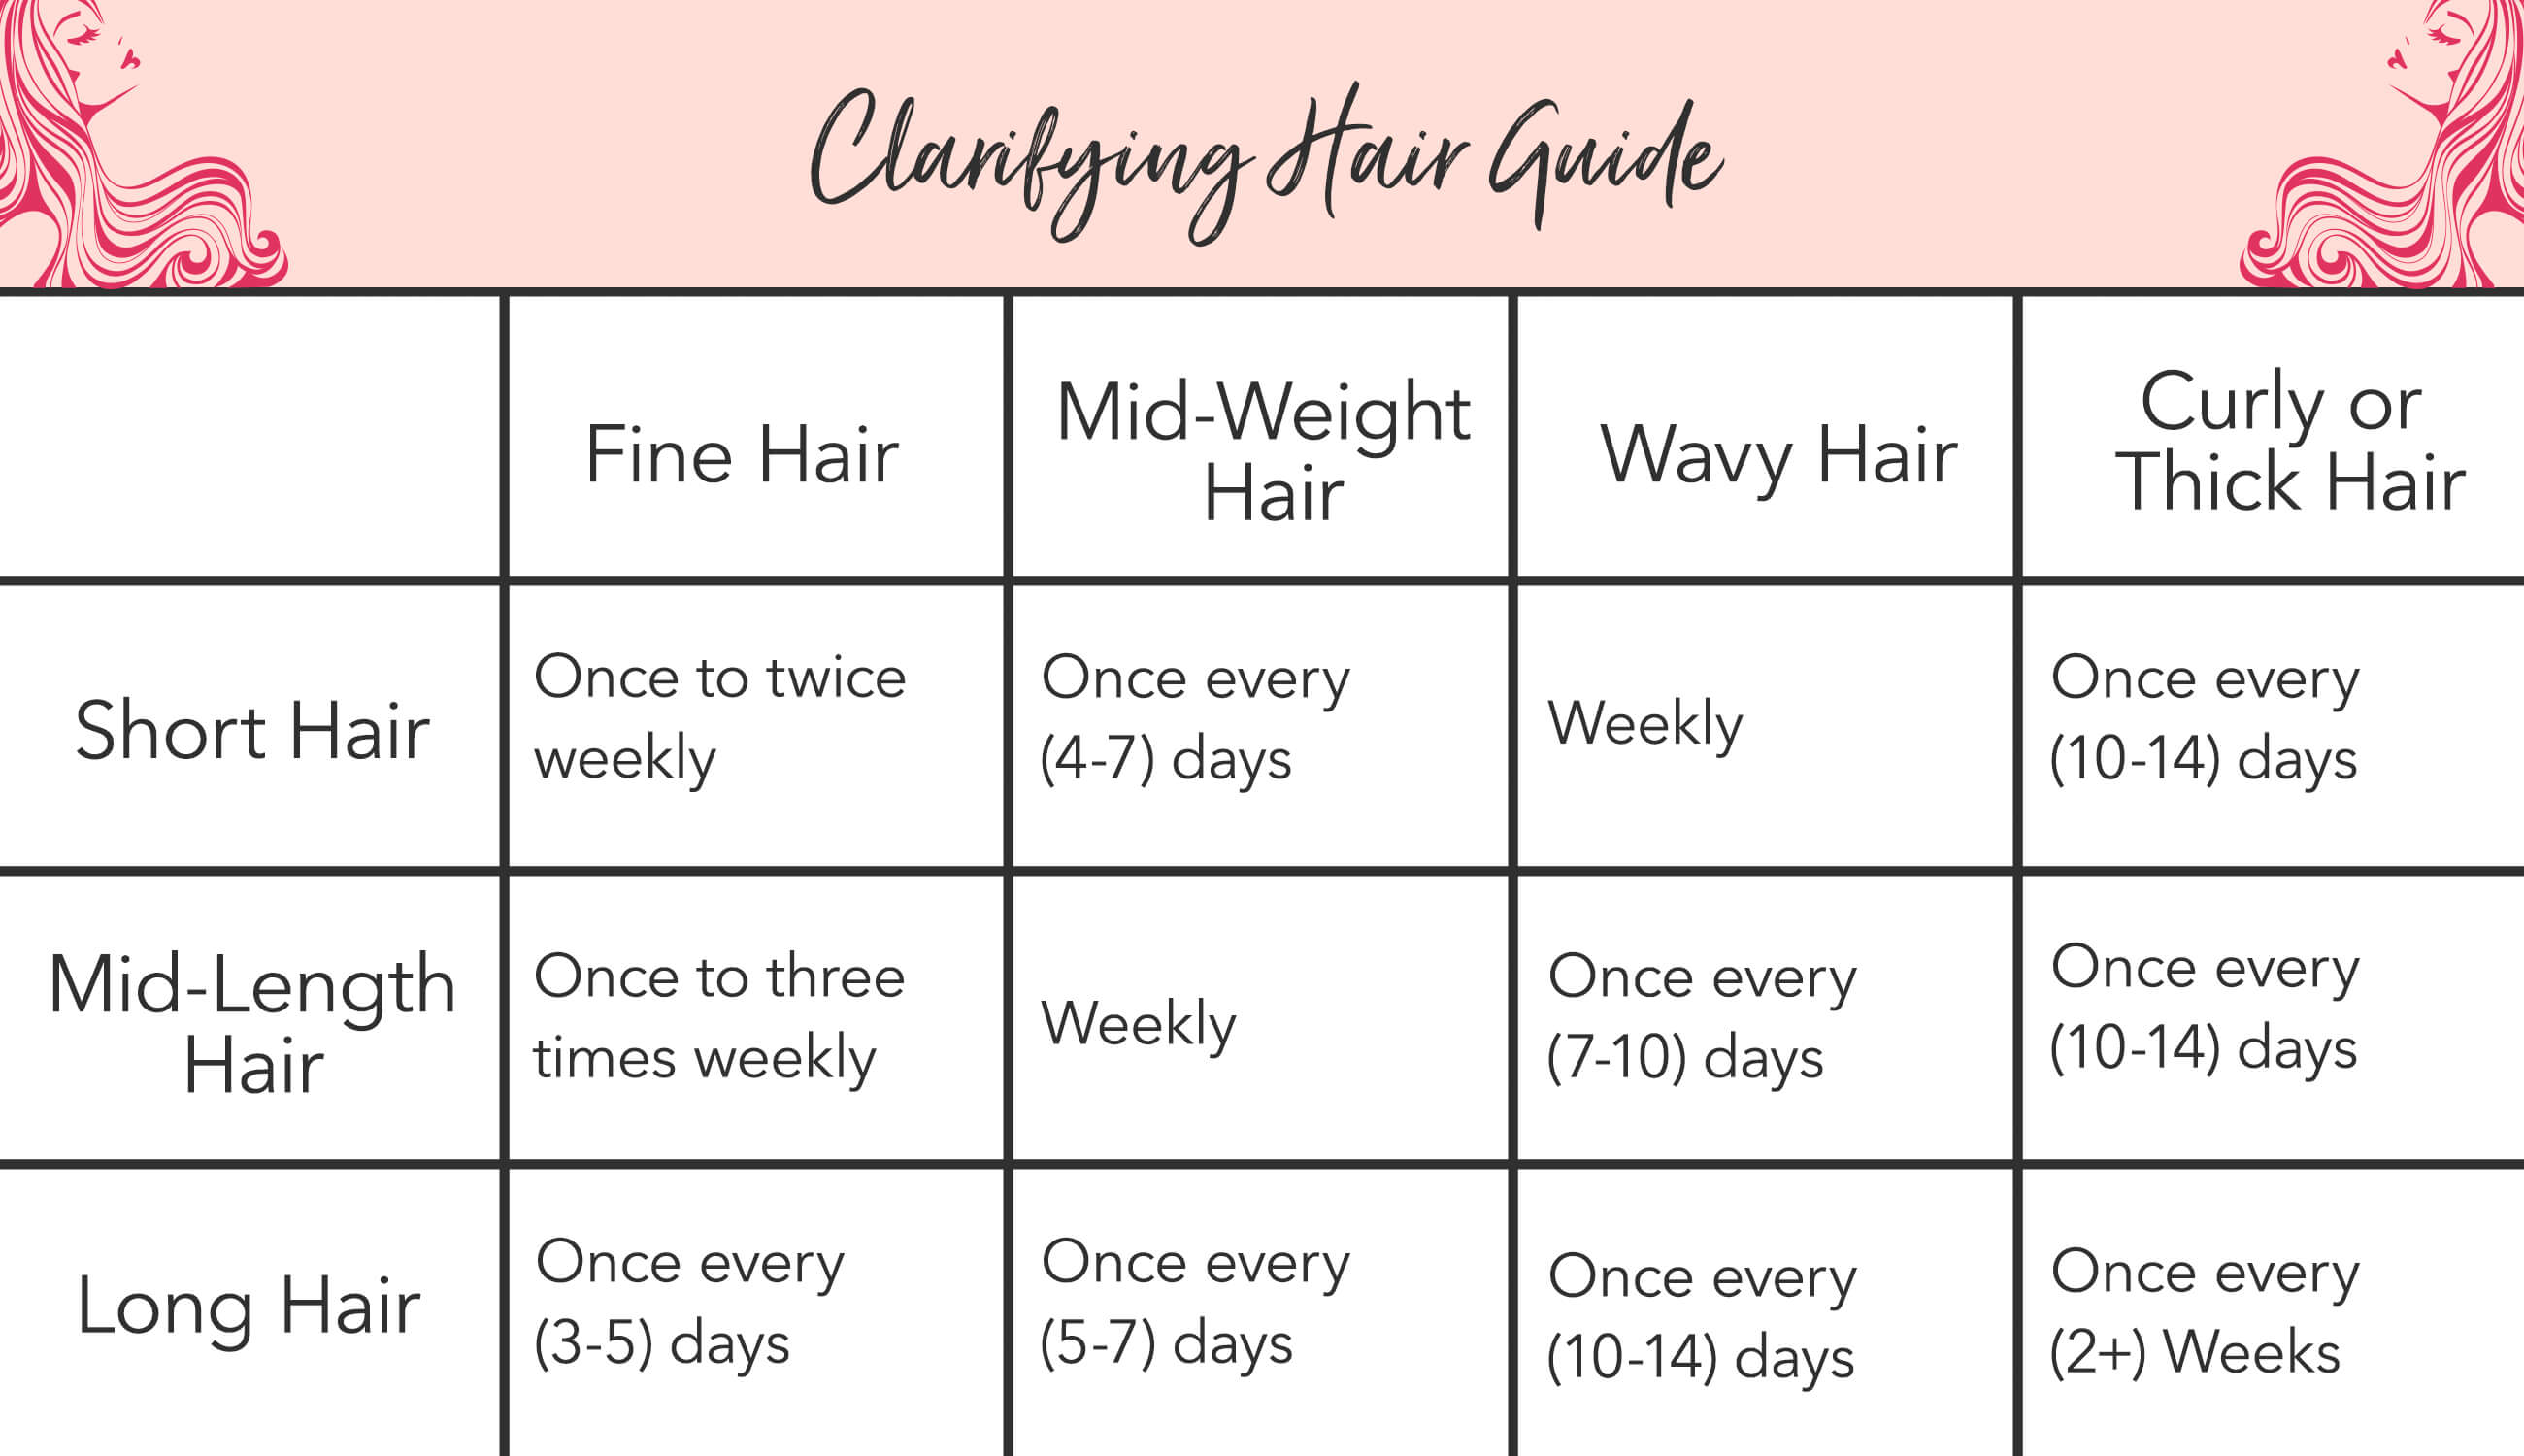 Clarifying Hair Guide